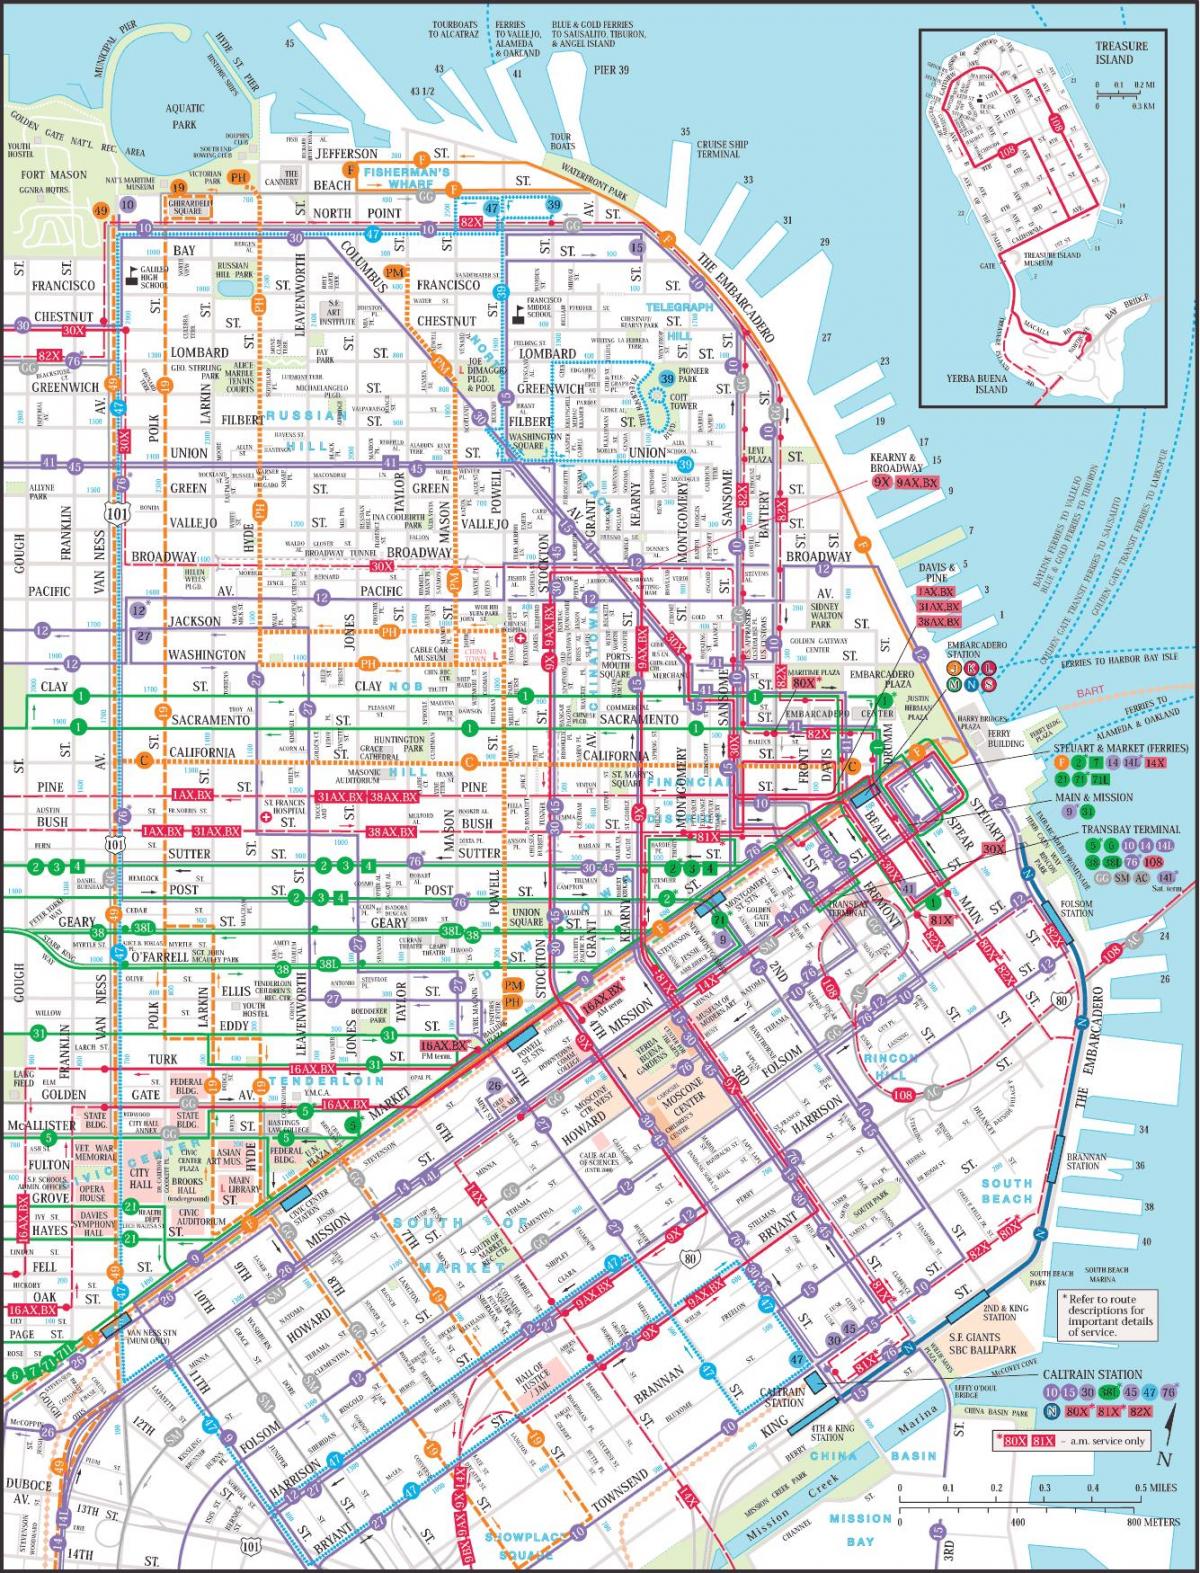 San Francisco valsts tranzīta karte